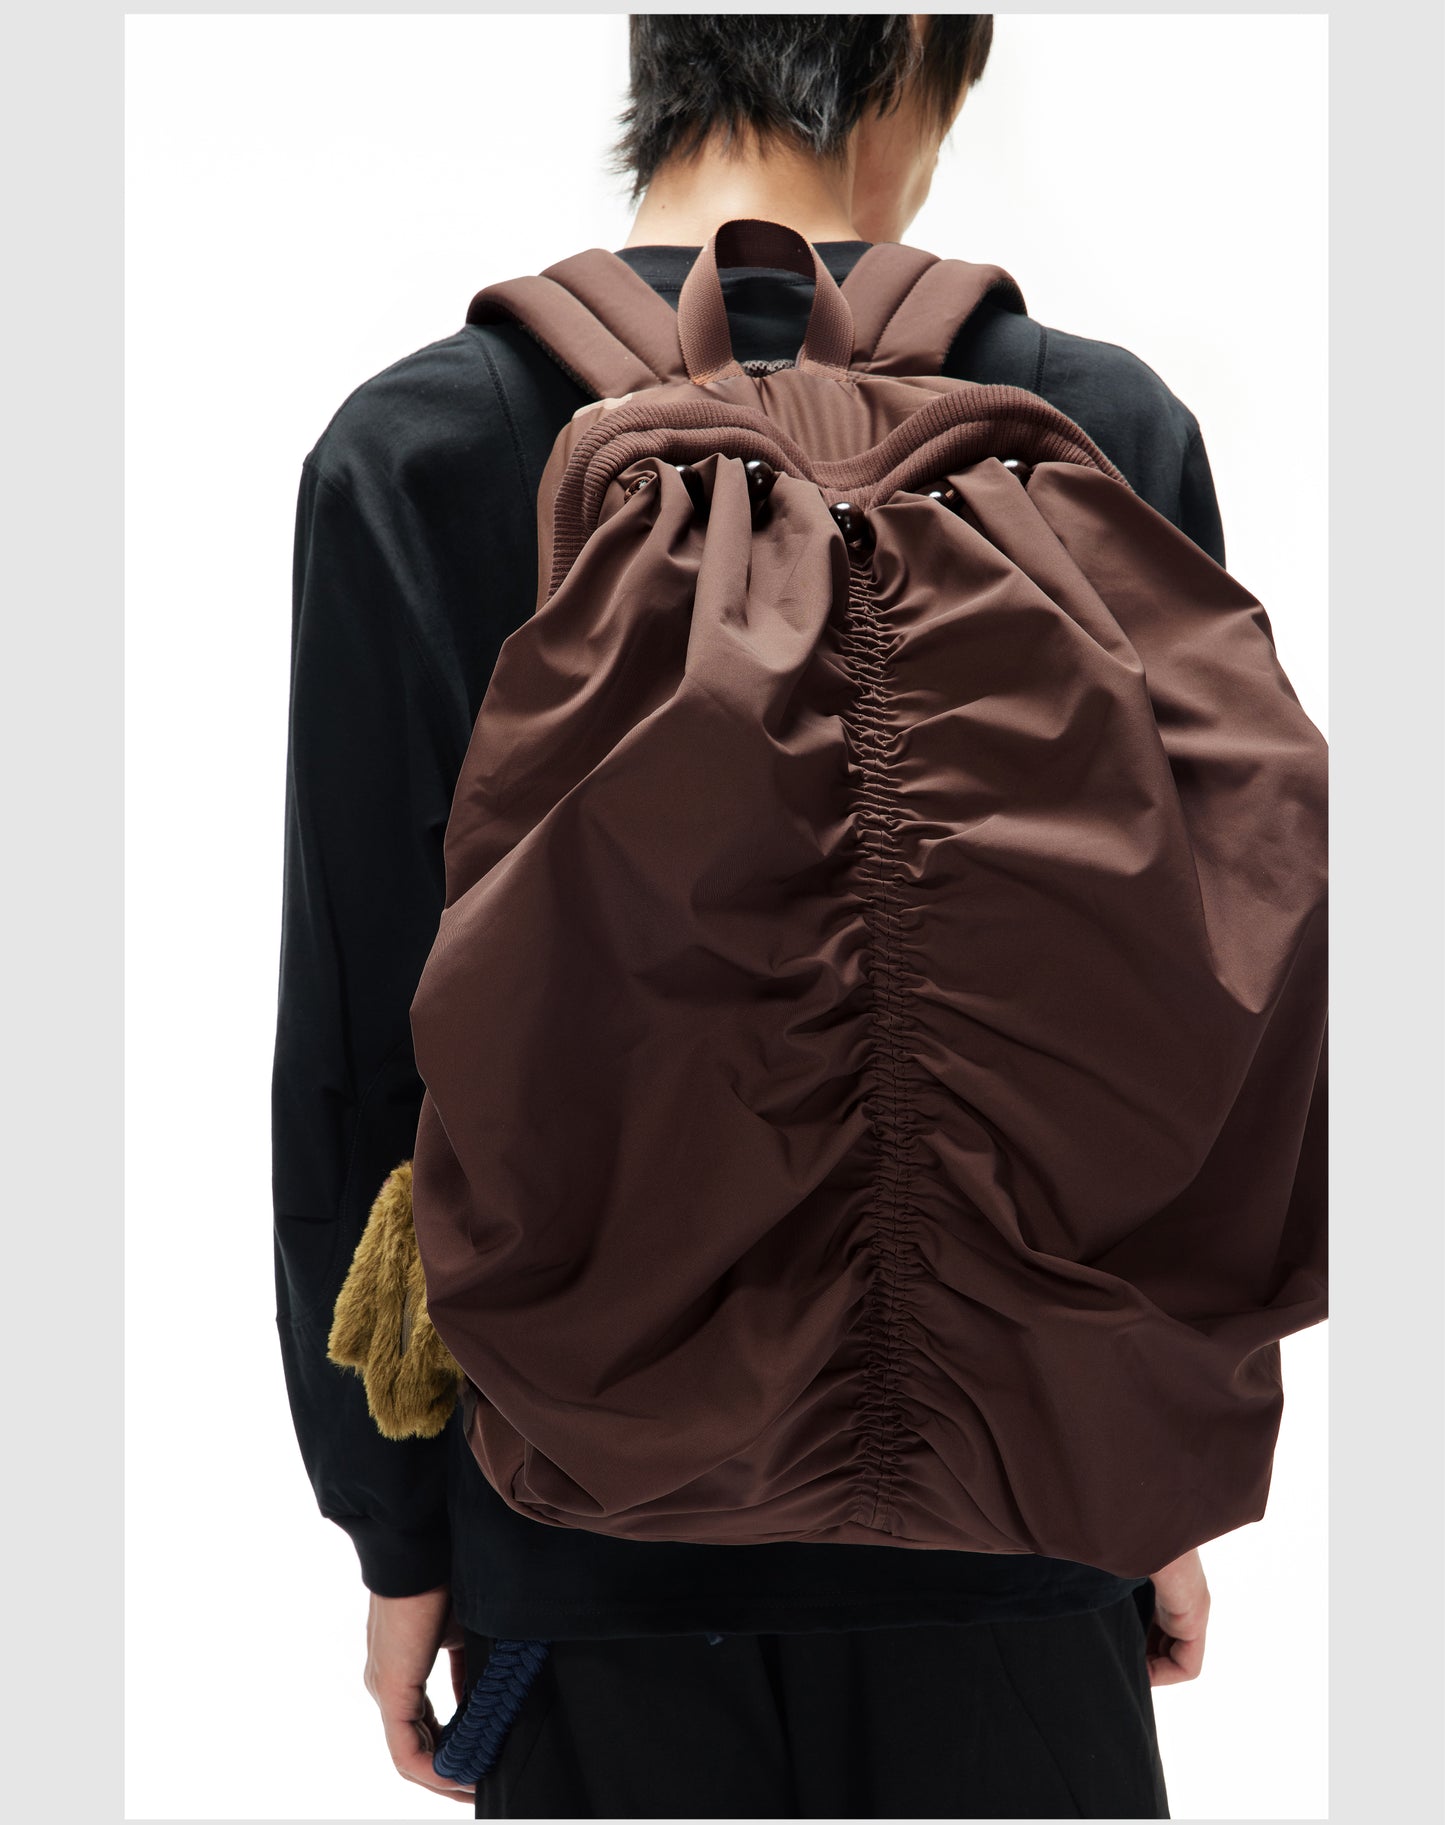 Versatile casual backpack